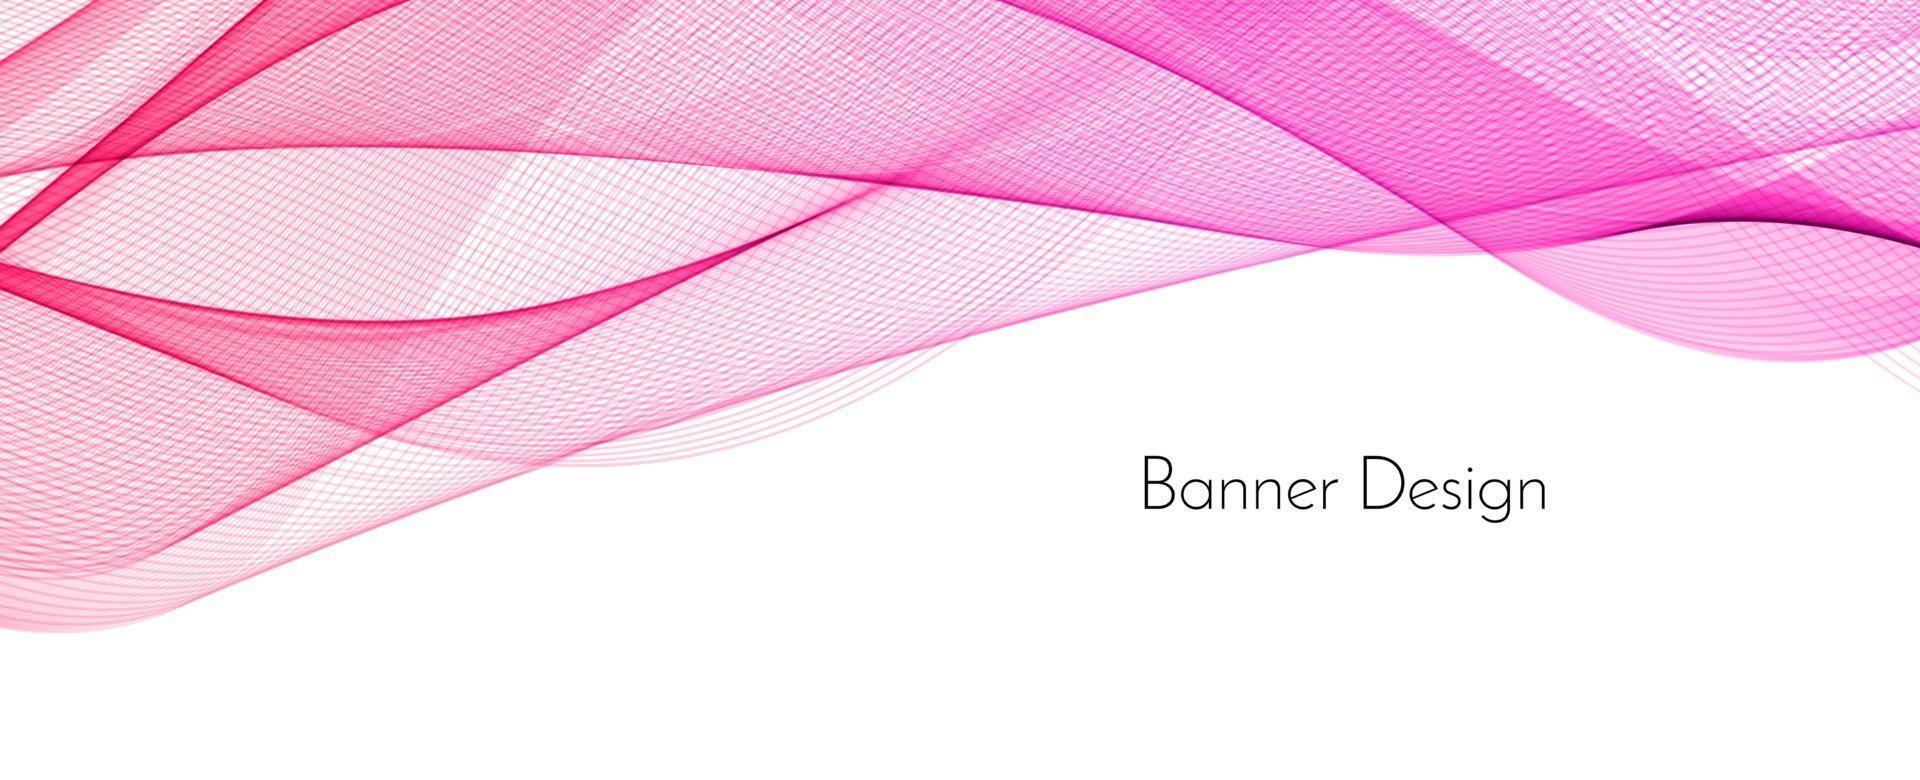 abstracte stijlvolle roze kleur decoratieve moderne golf banner achtergrond vector